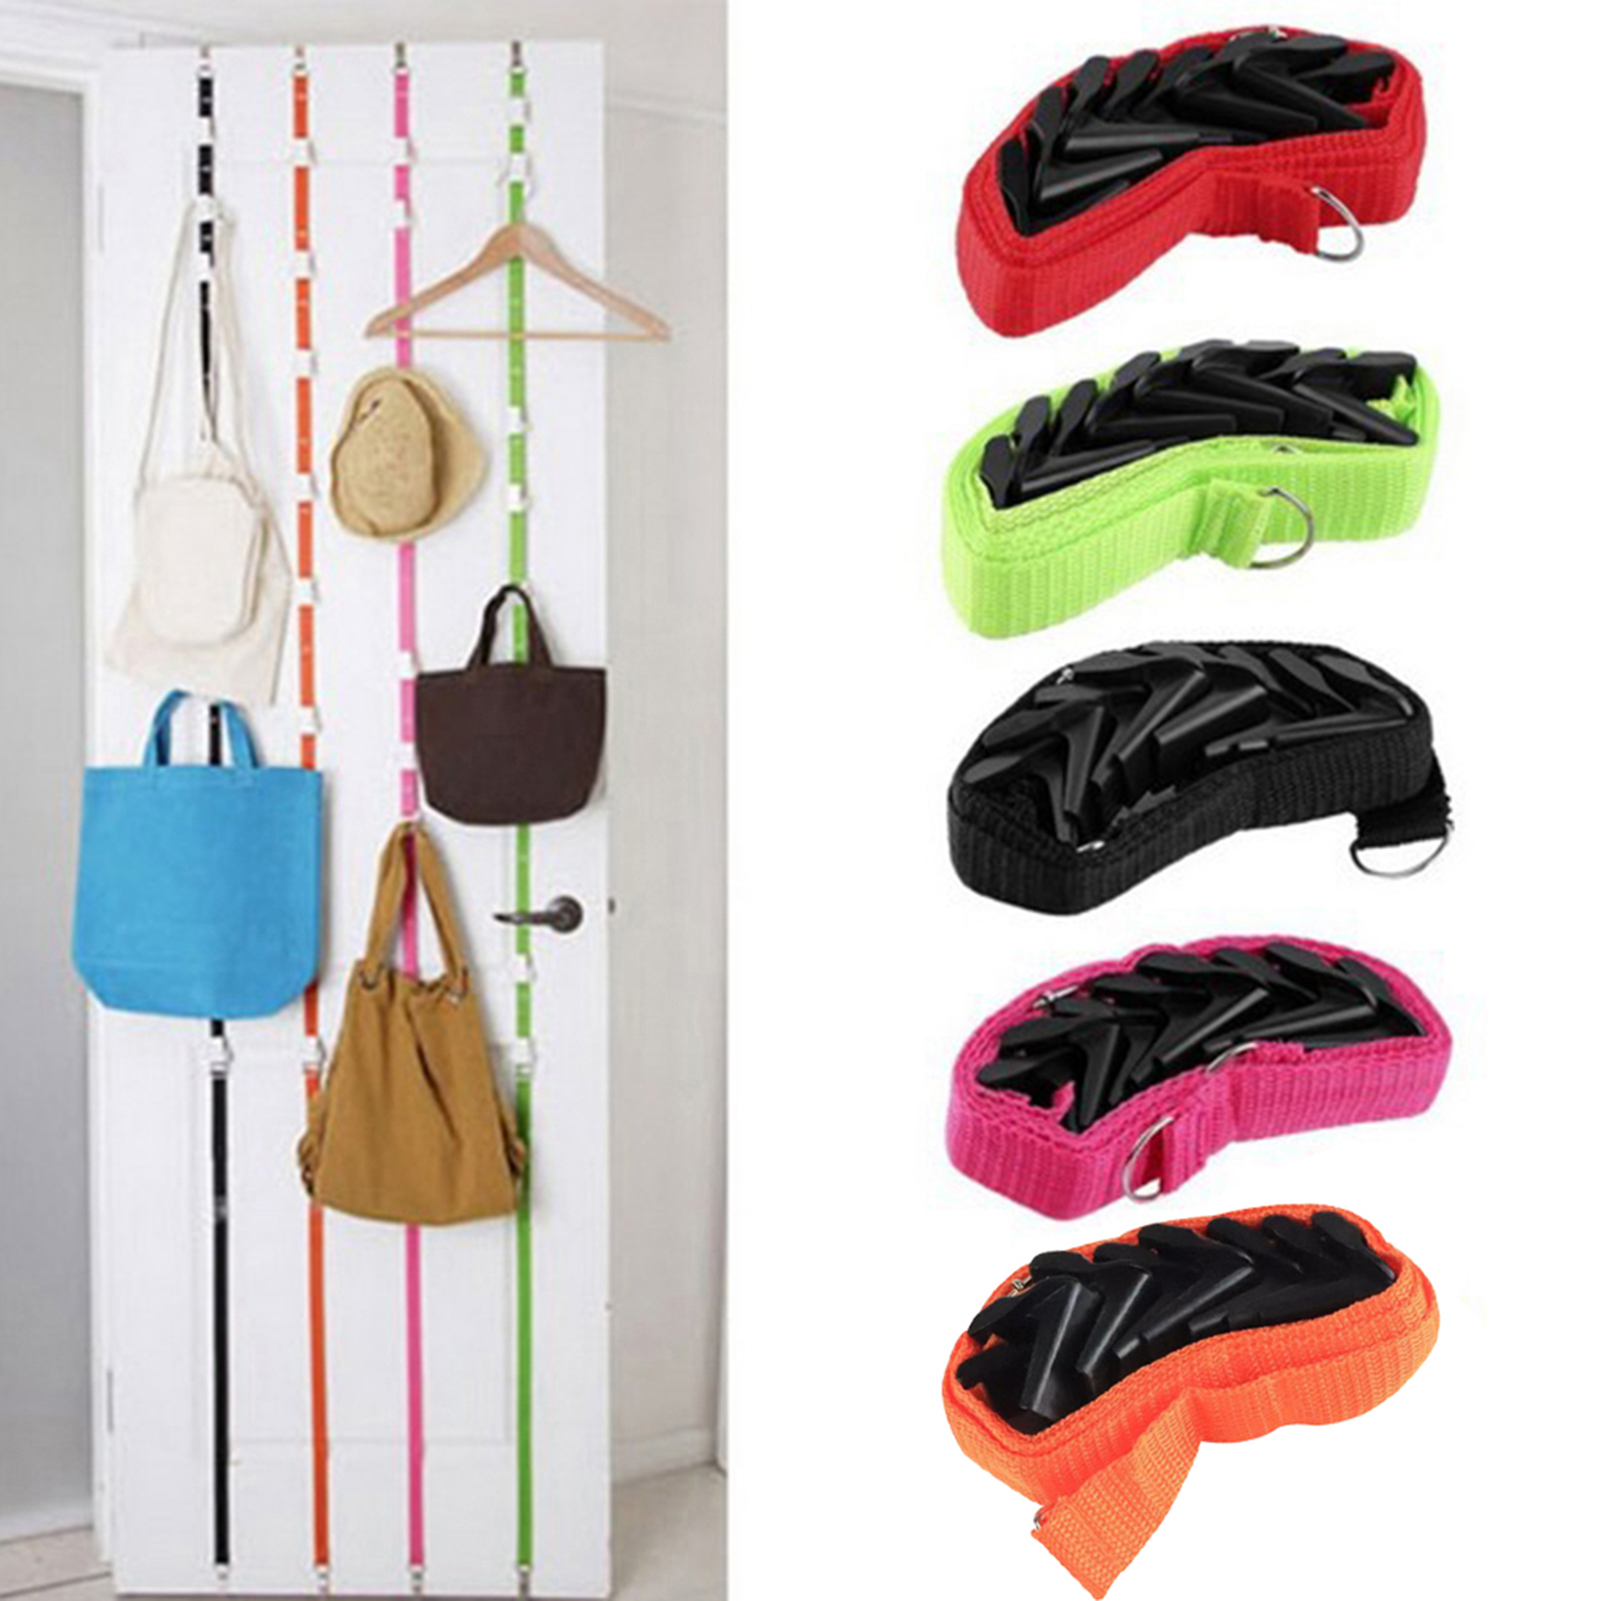 Ludlz Adjustable Hanging Hook Rack Rope Door Hanger Clothes Bag Hat Storage String Wall Mounted Coat Rack锛孌oor Clothes Hanger for Living Room, Cloakroom, Bathroom - image 1 of 7